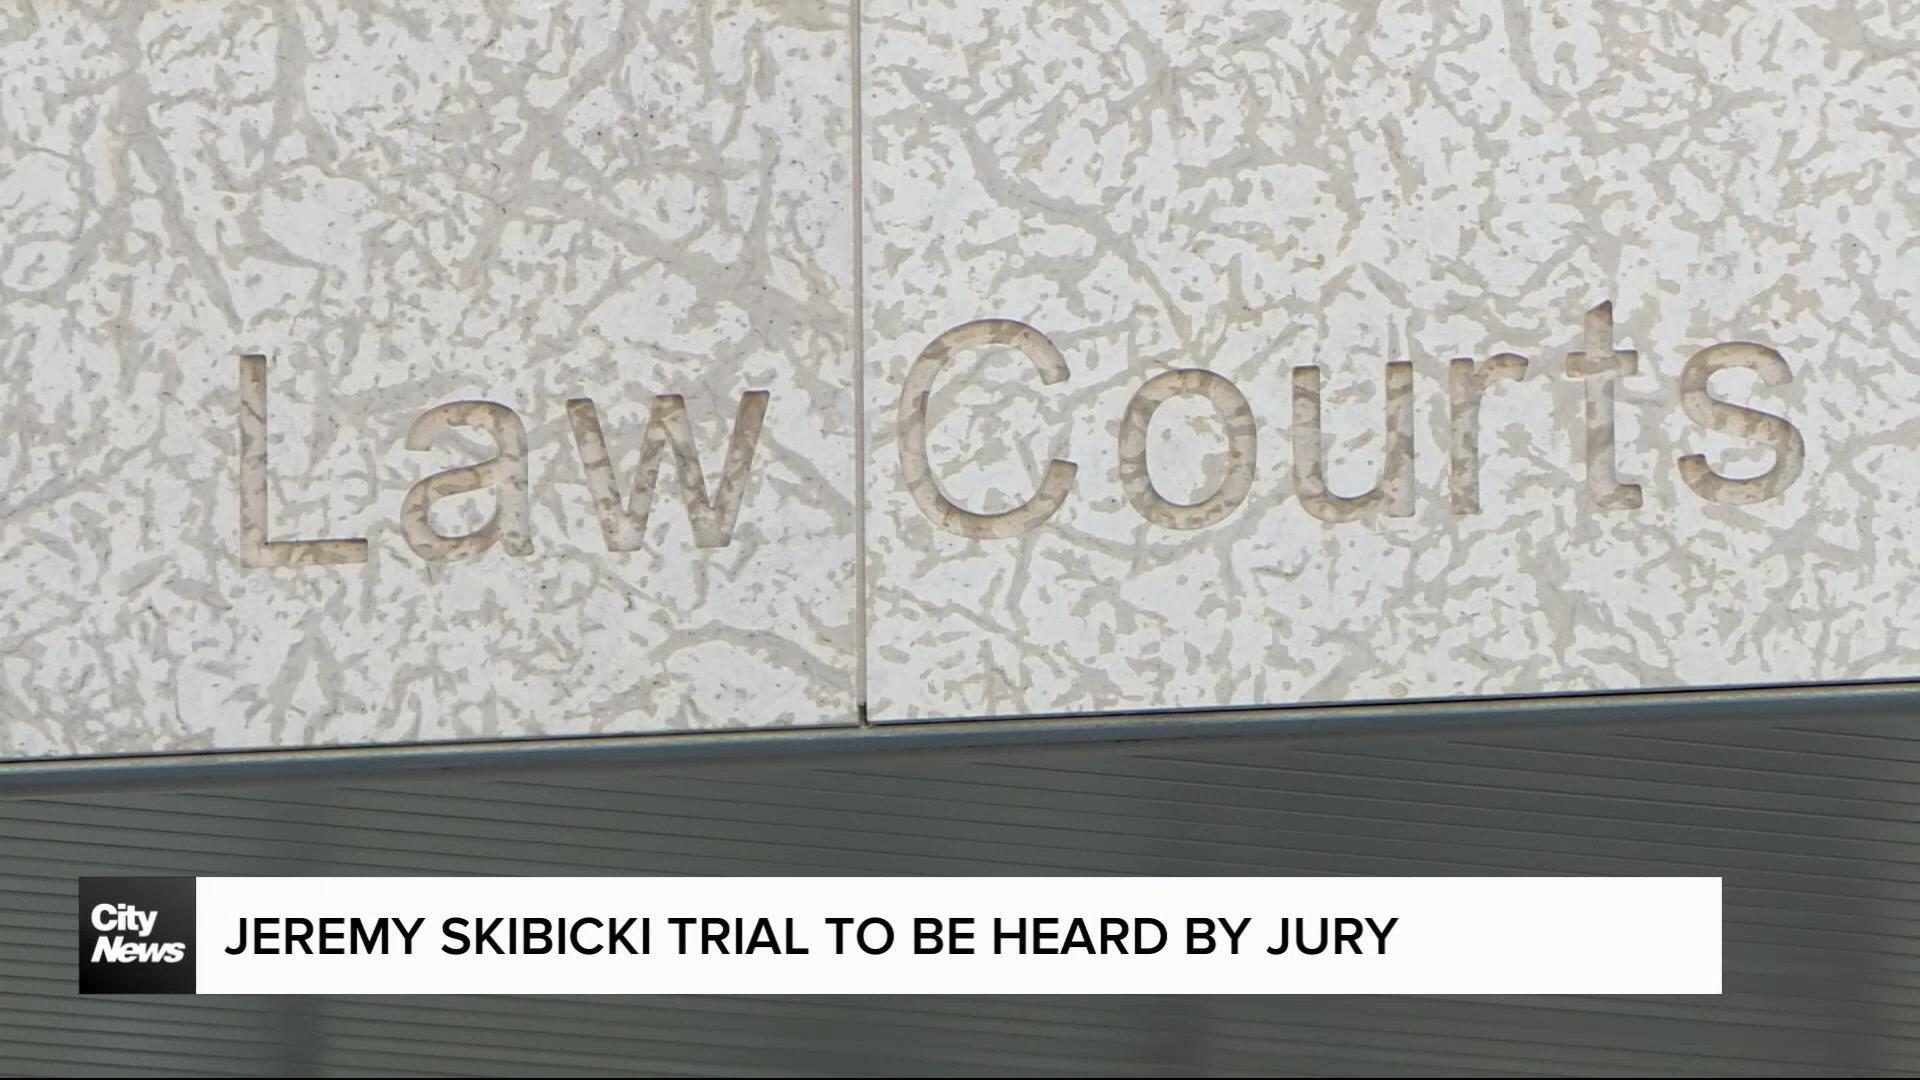 Alleged serial killer Jeremy Skibicki will face a jury